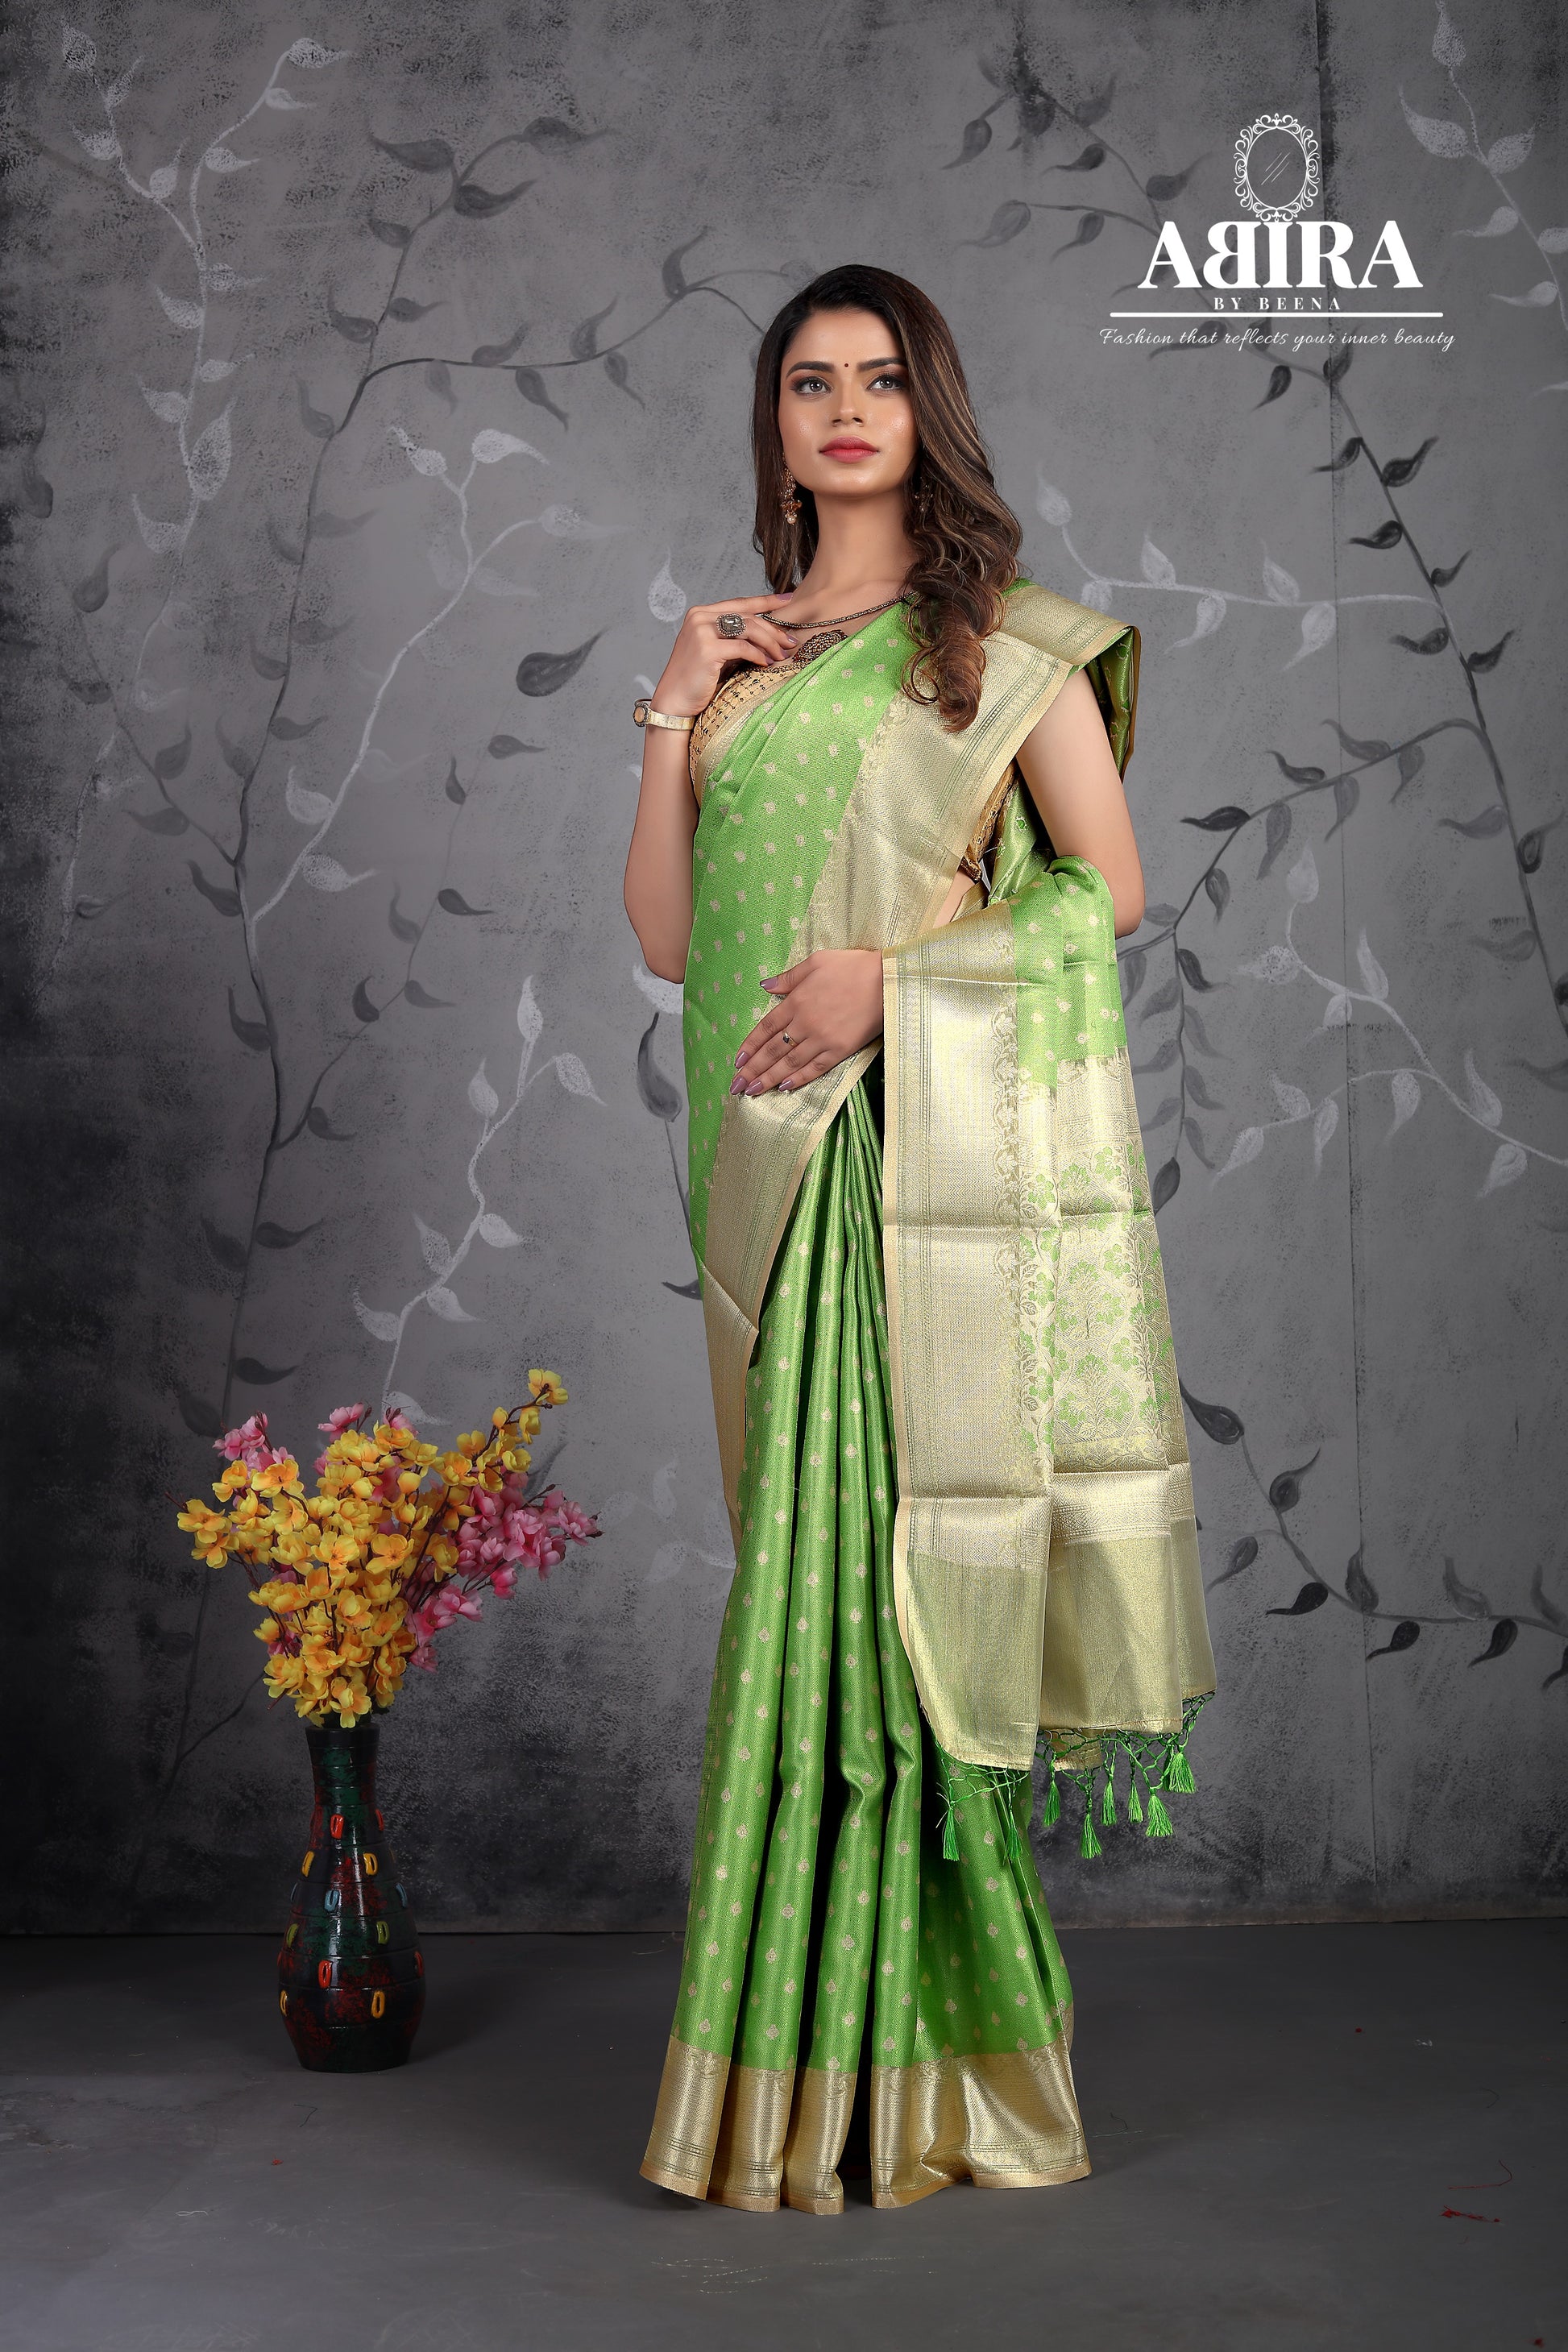 Parrot green Banaras Tansui Silk saree - AbirabyBeena